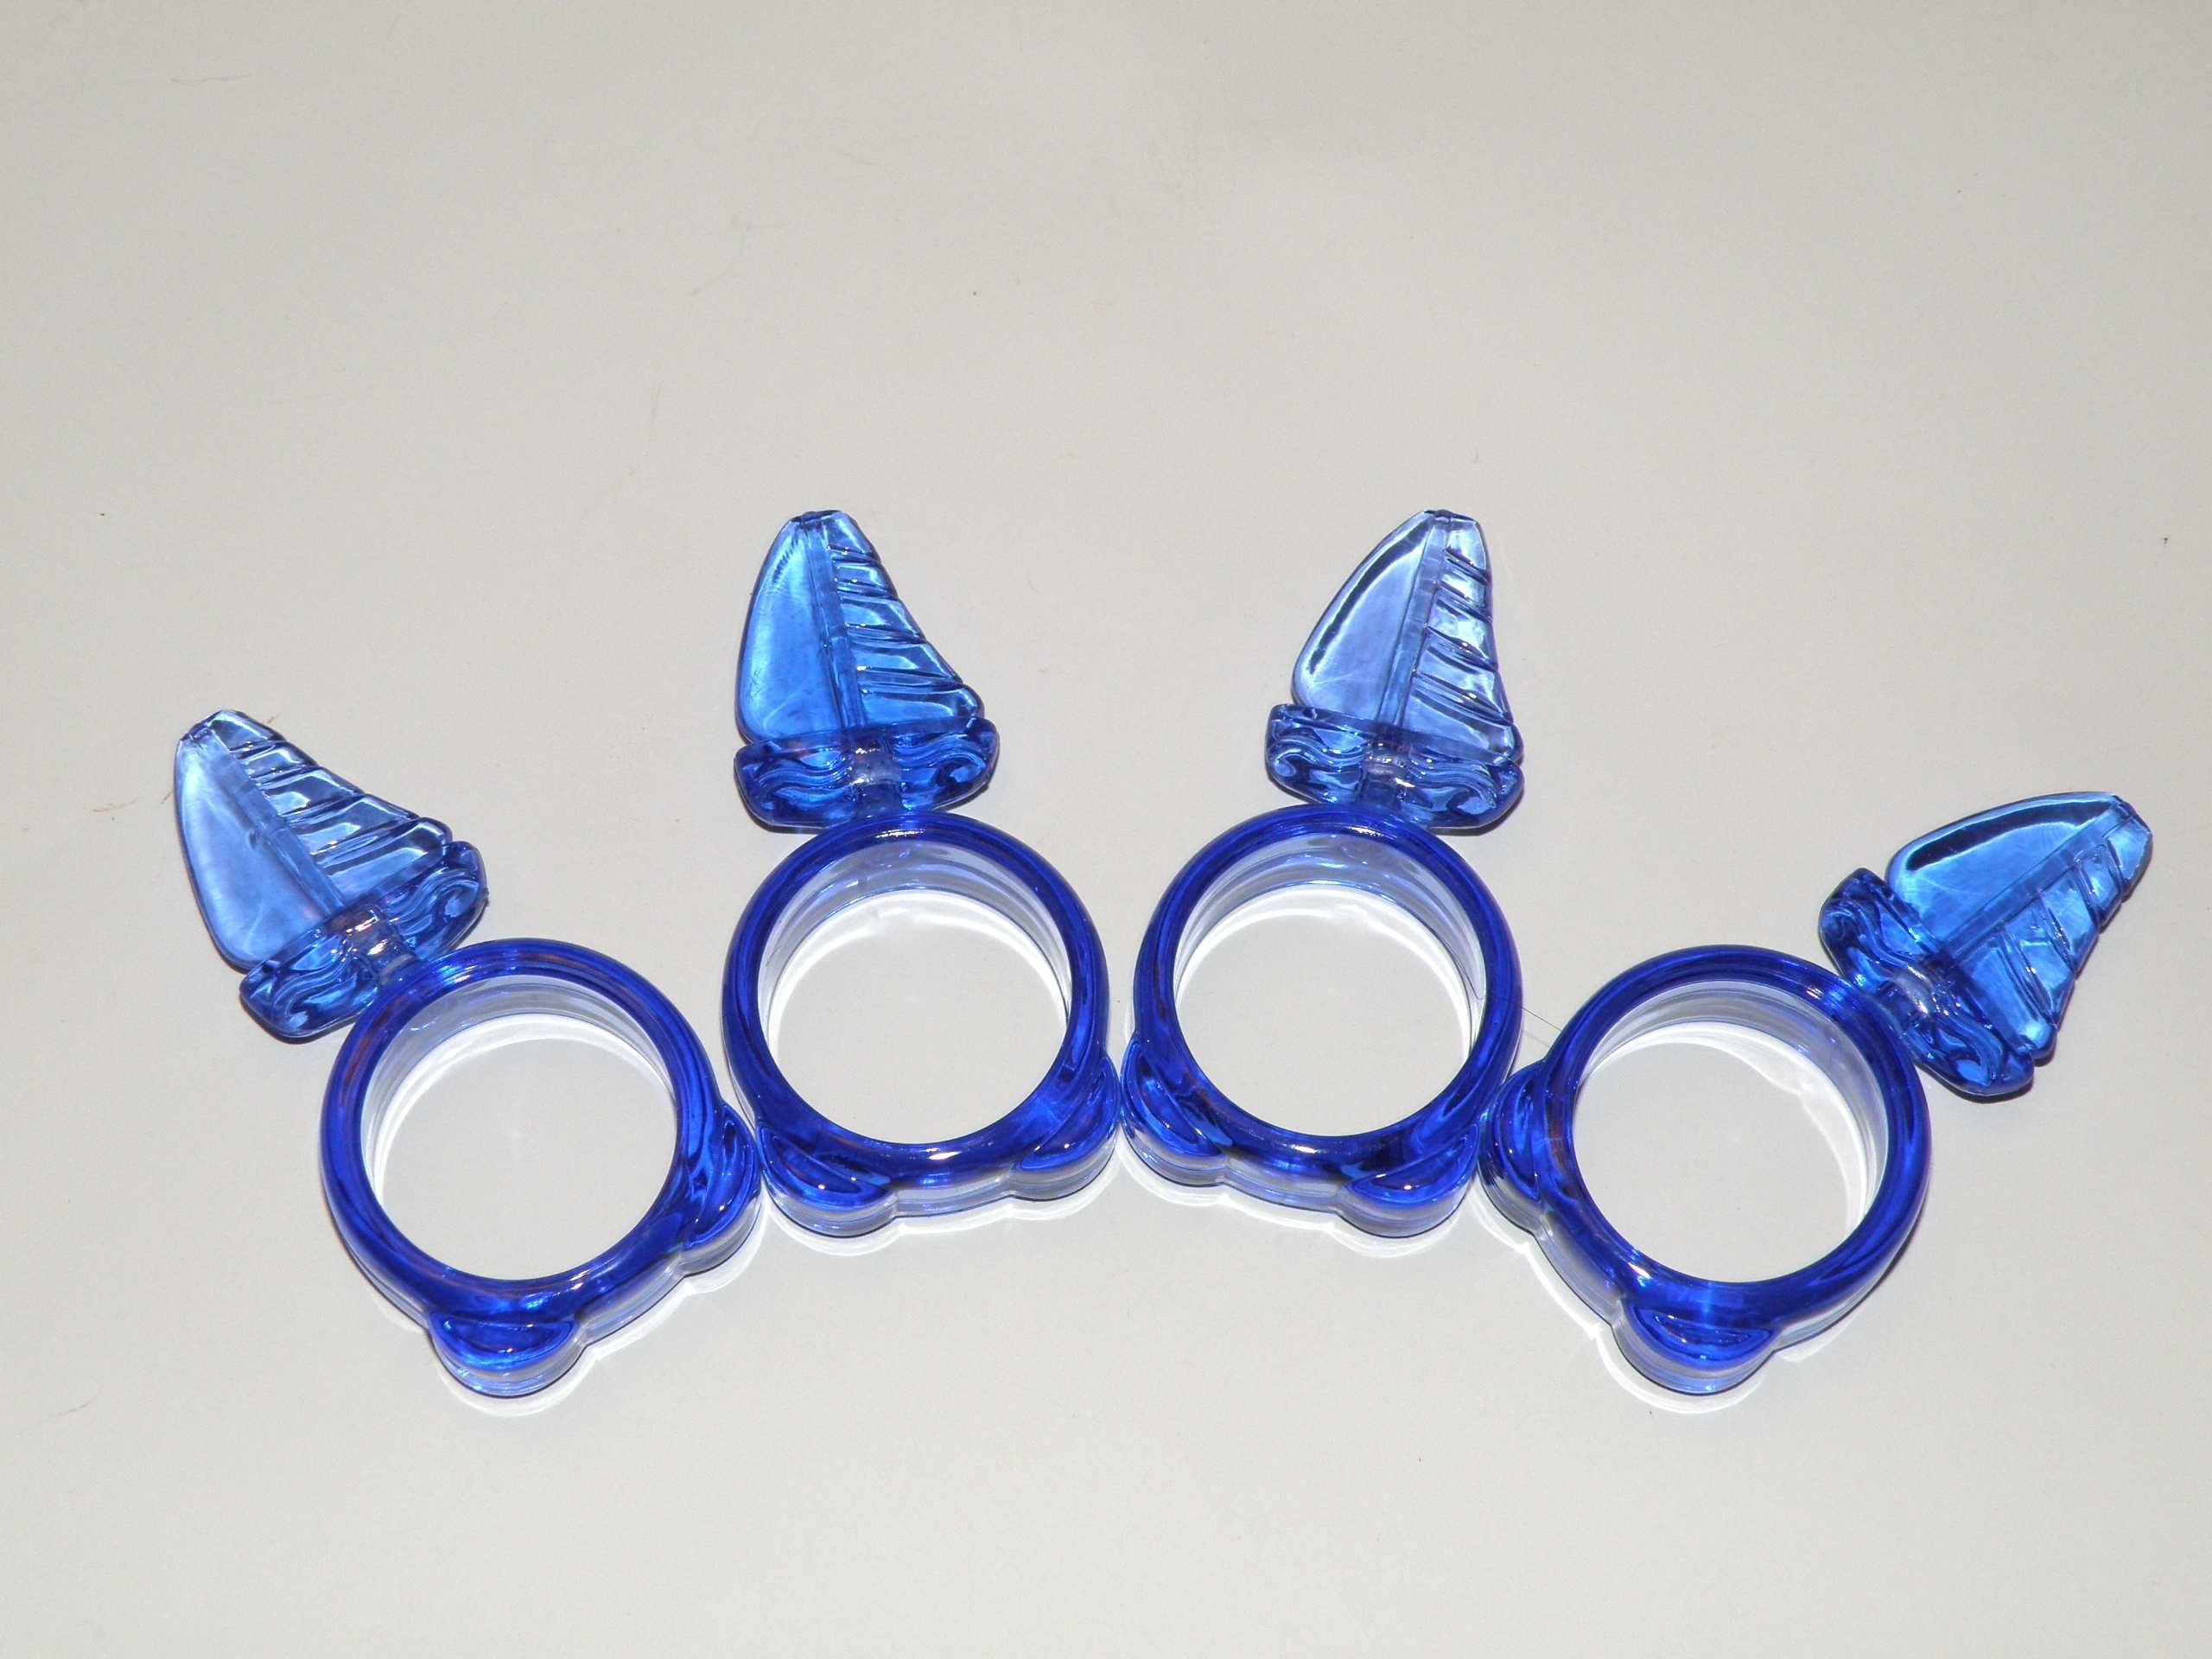 Кольца для салфеток синие, набор 4 шт